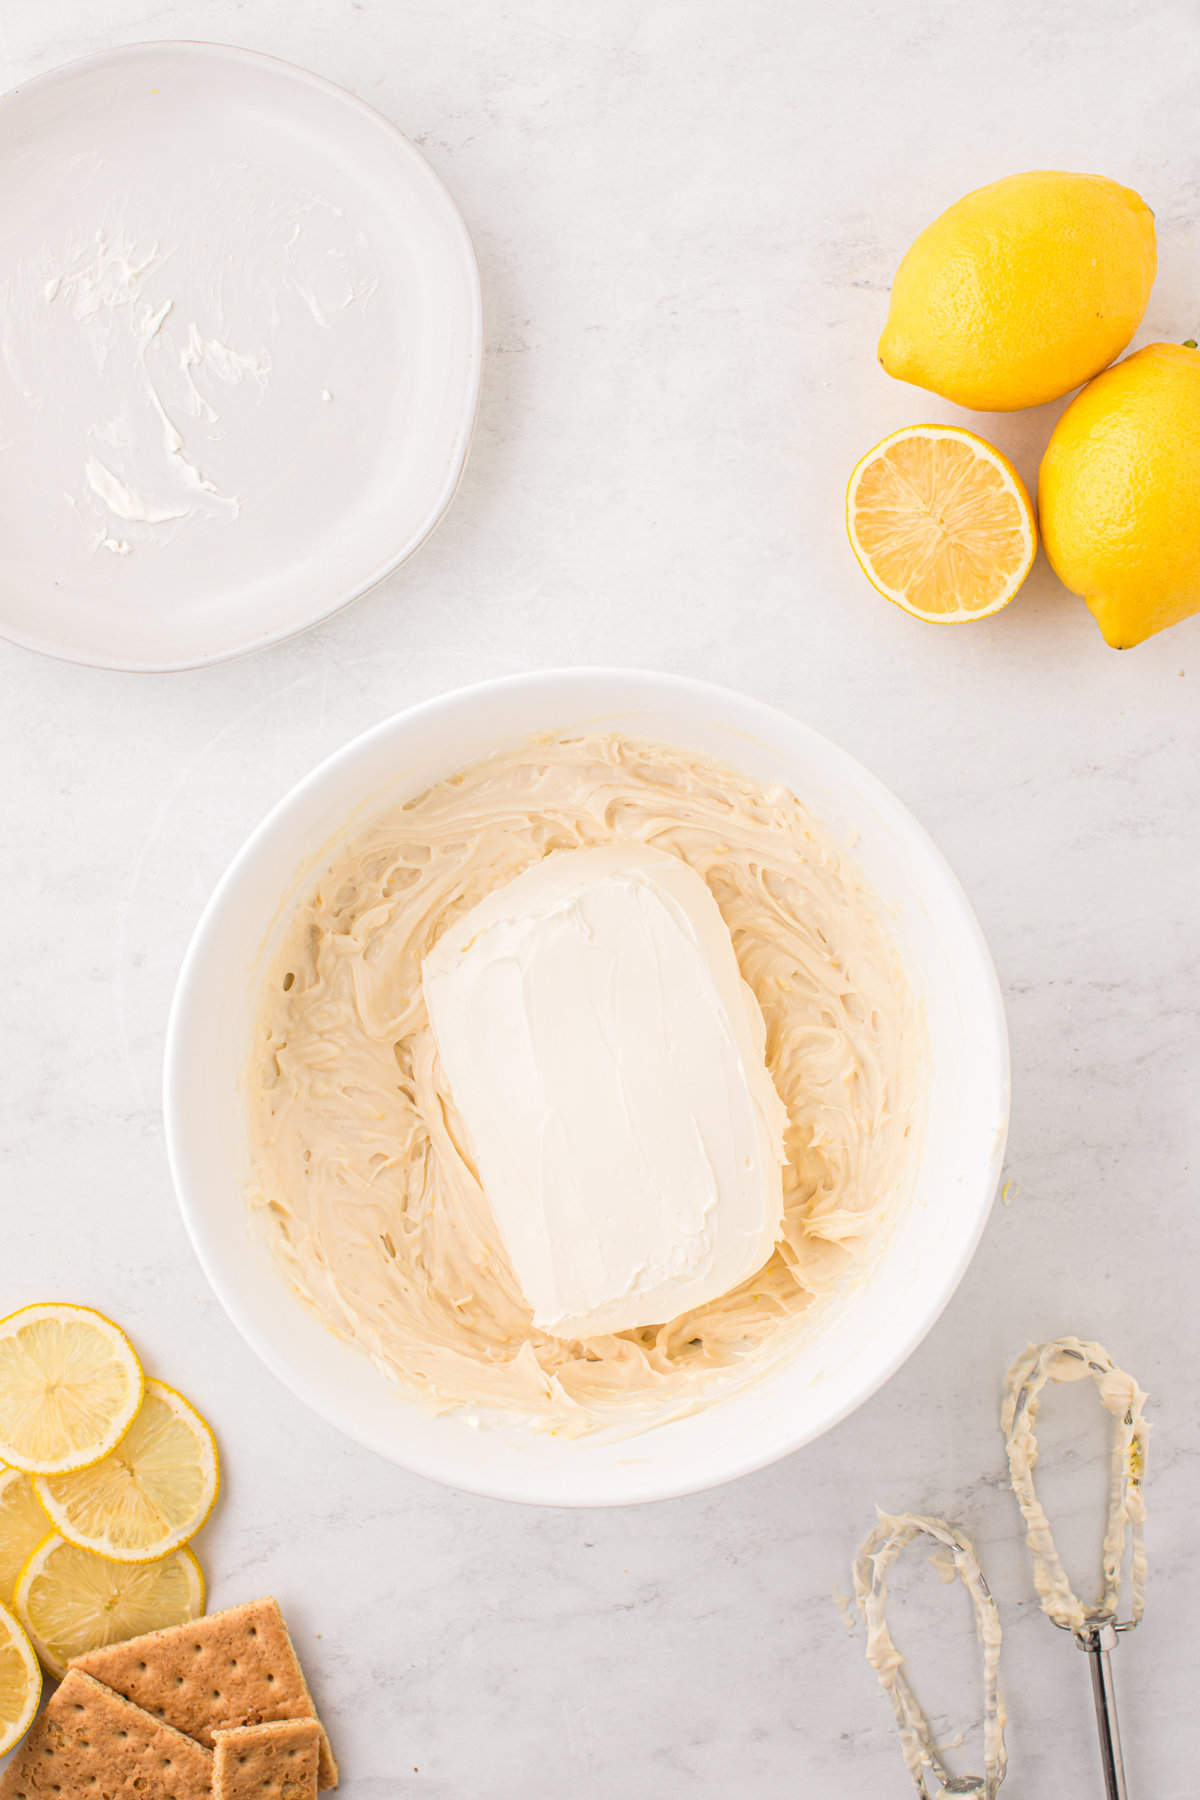 Adding softened cream cheese block to mixed Lemon Cheesecake ingredients